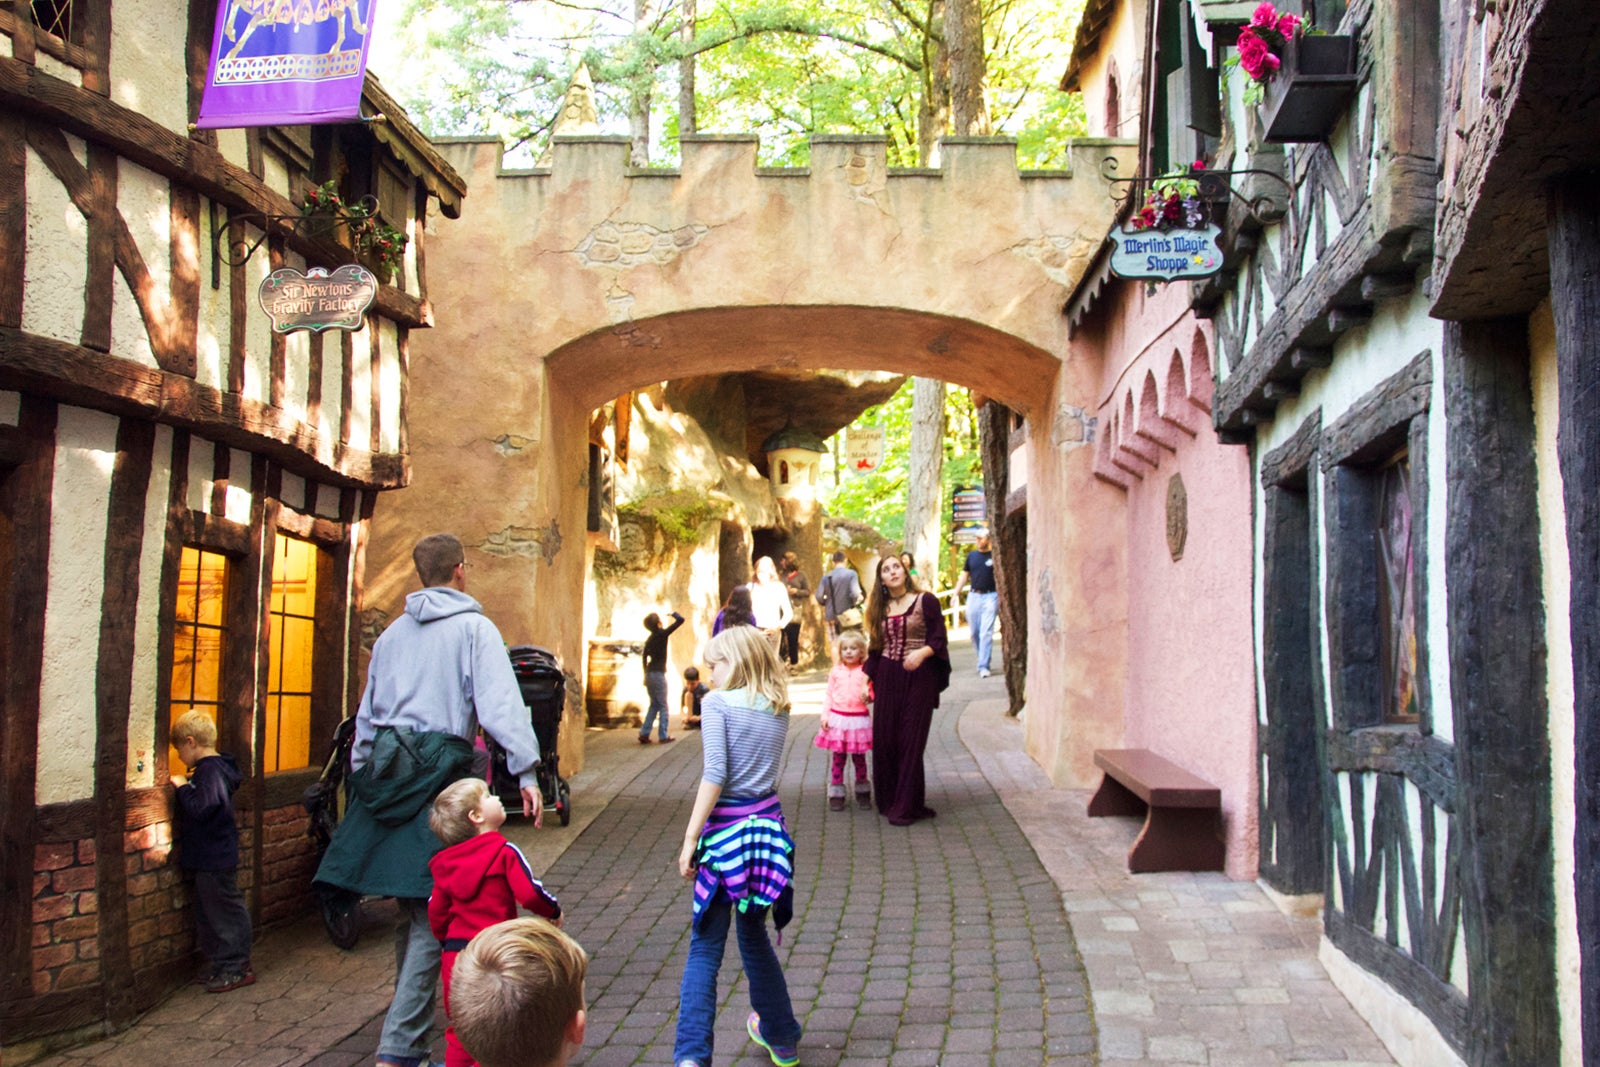 Replica European village at Enchanted Forest theme park